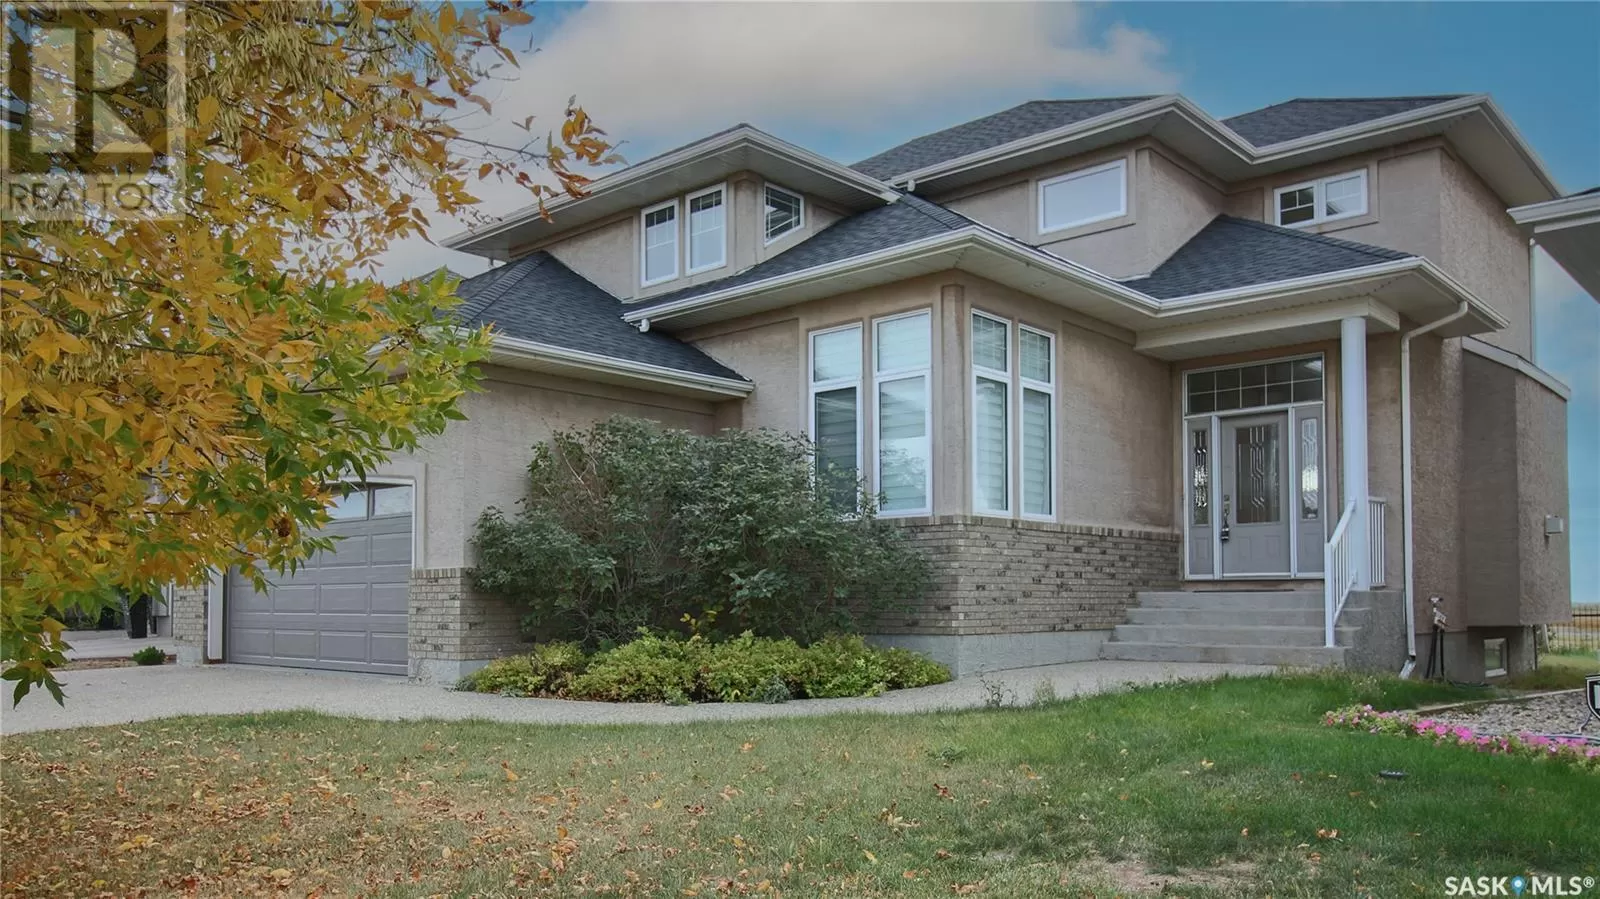 House for rent: 12059 Wascana Heights, Regina, Saskatchewan S4V 3C2